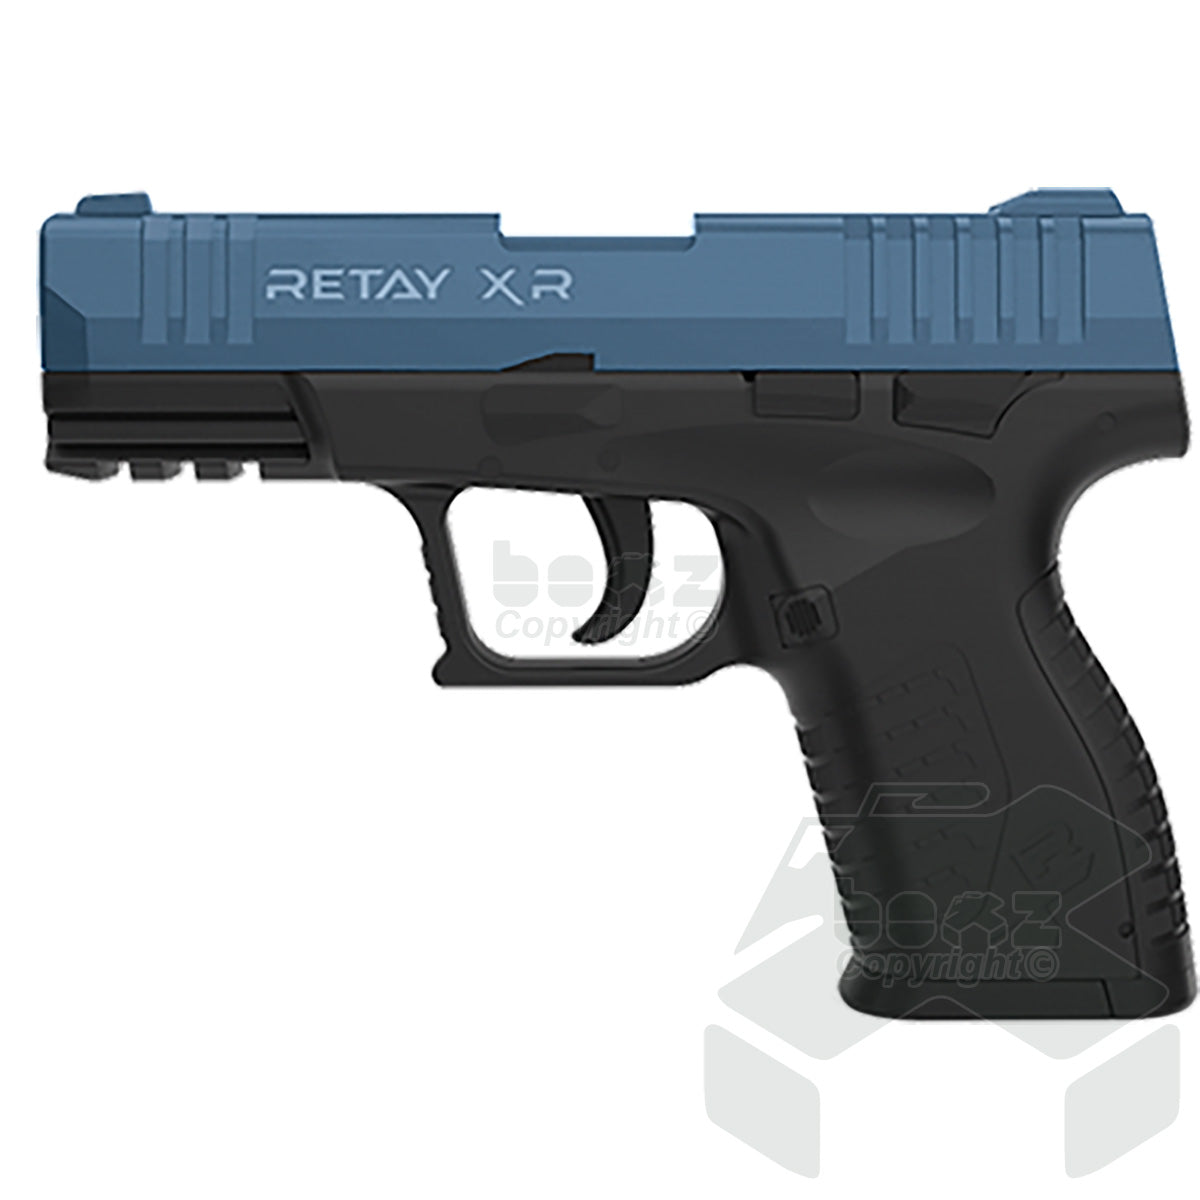 Retay XR Blank Firing Pistol - 9mm  - Black